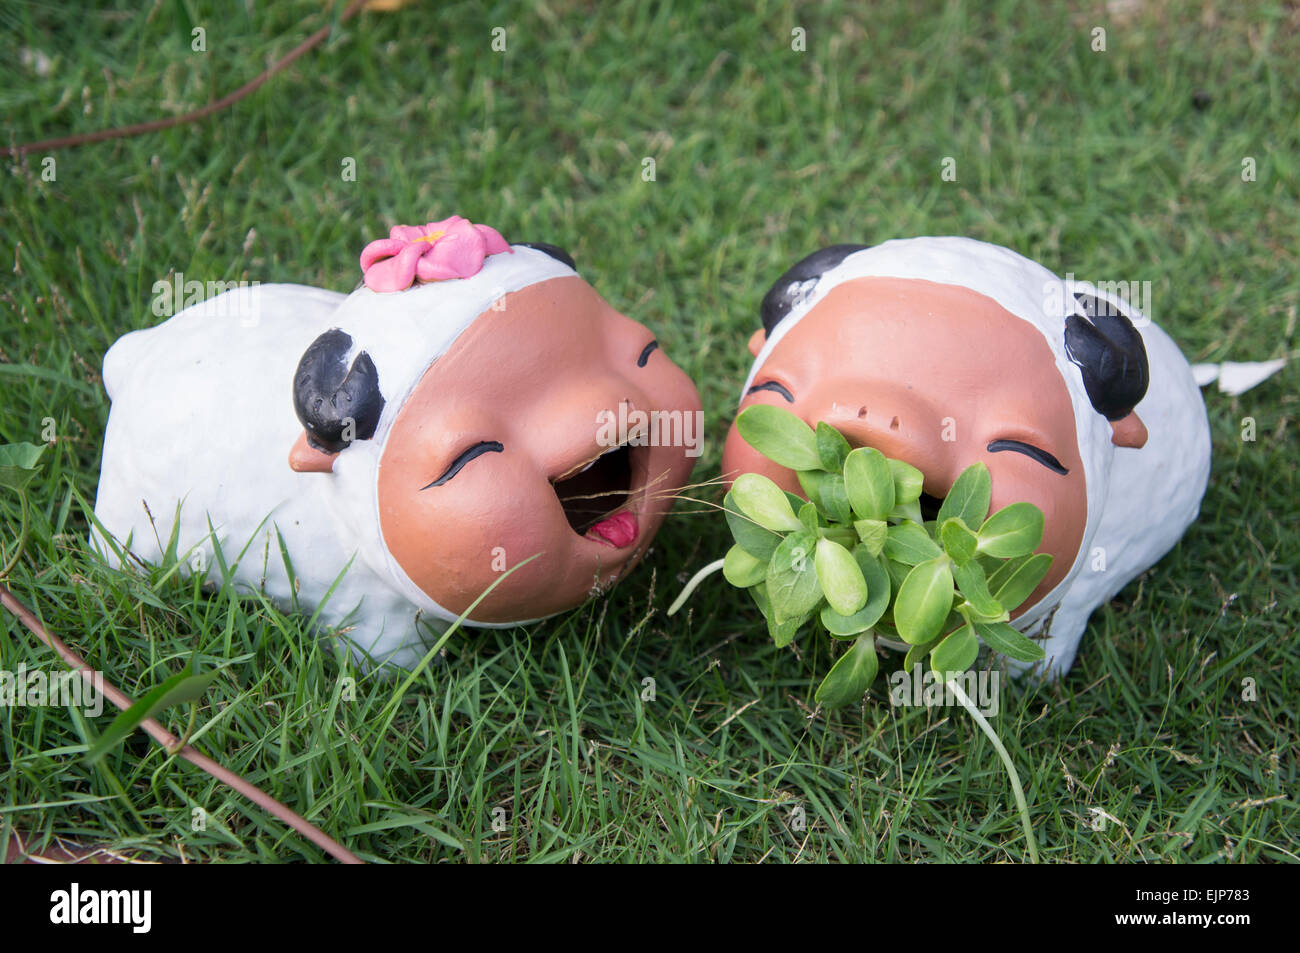 sheep ceramic doll garden grass two young Stock Photo